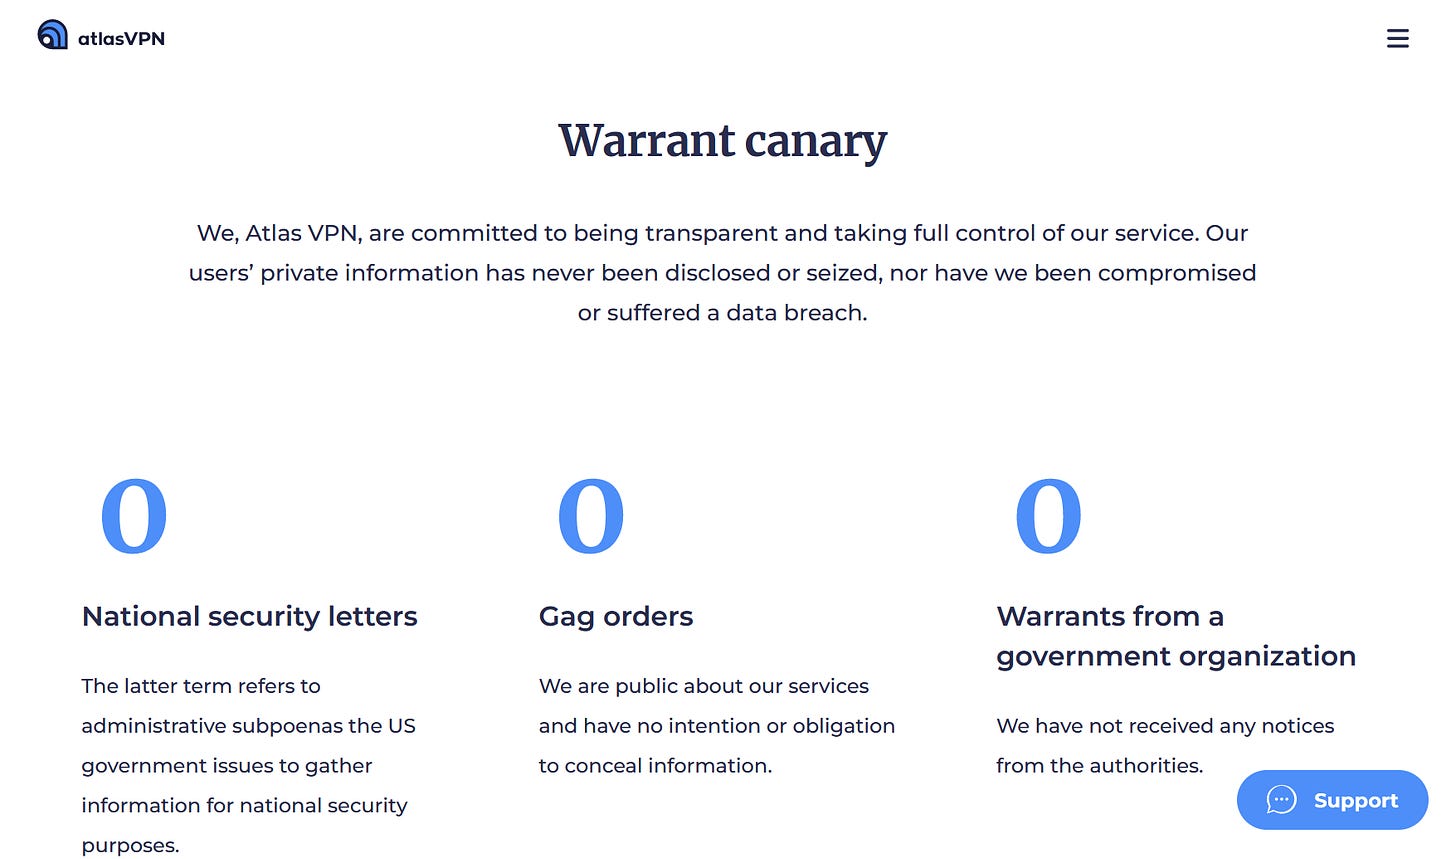 atlas vpn warrant canary